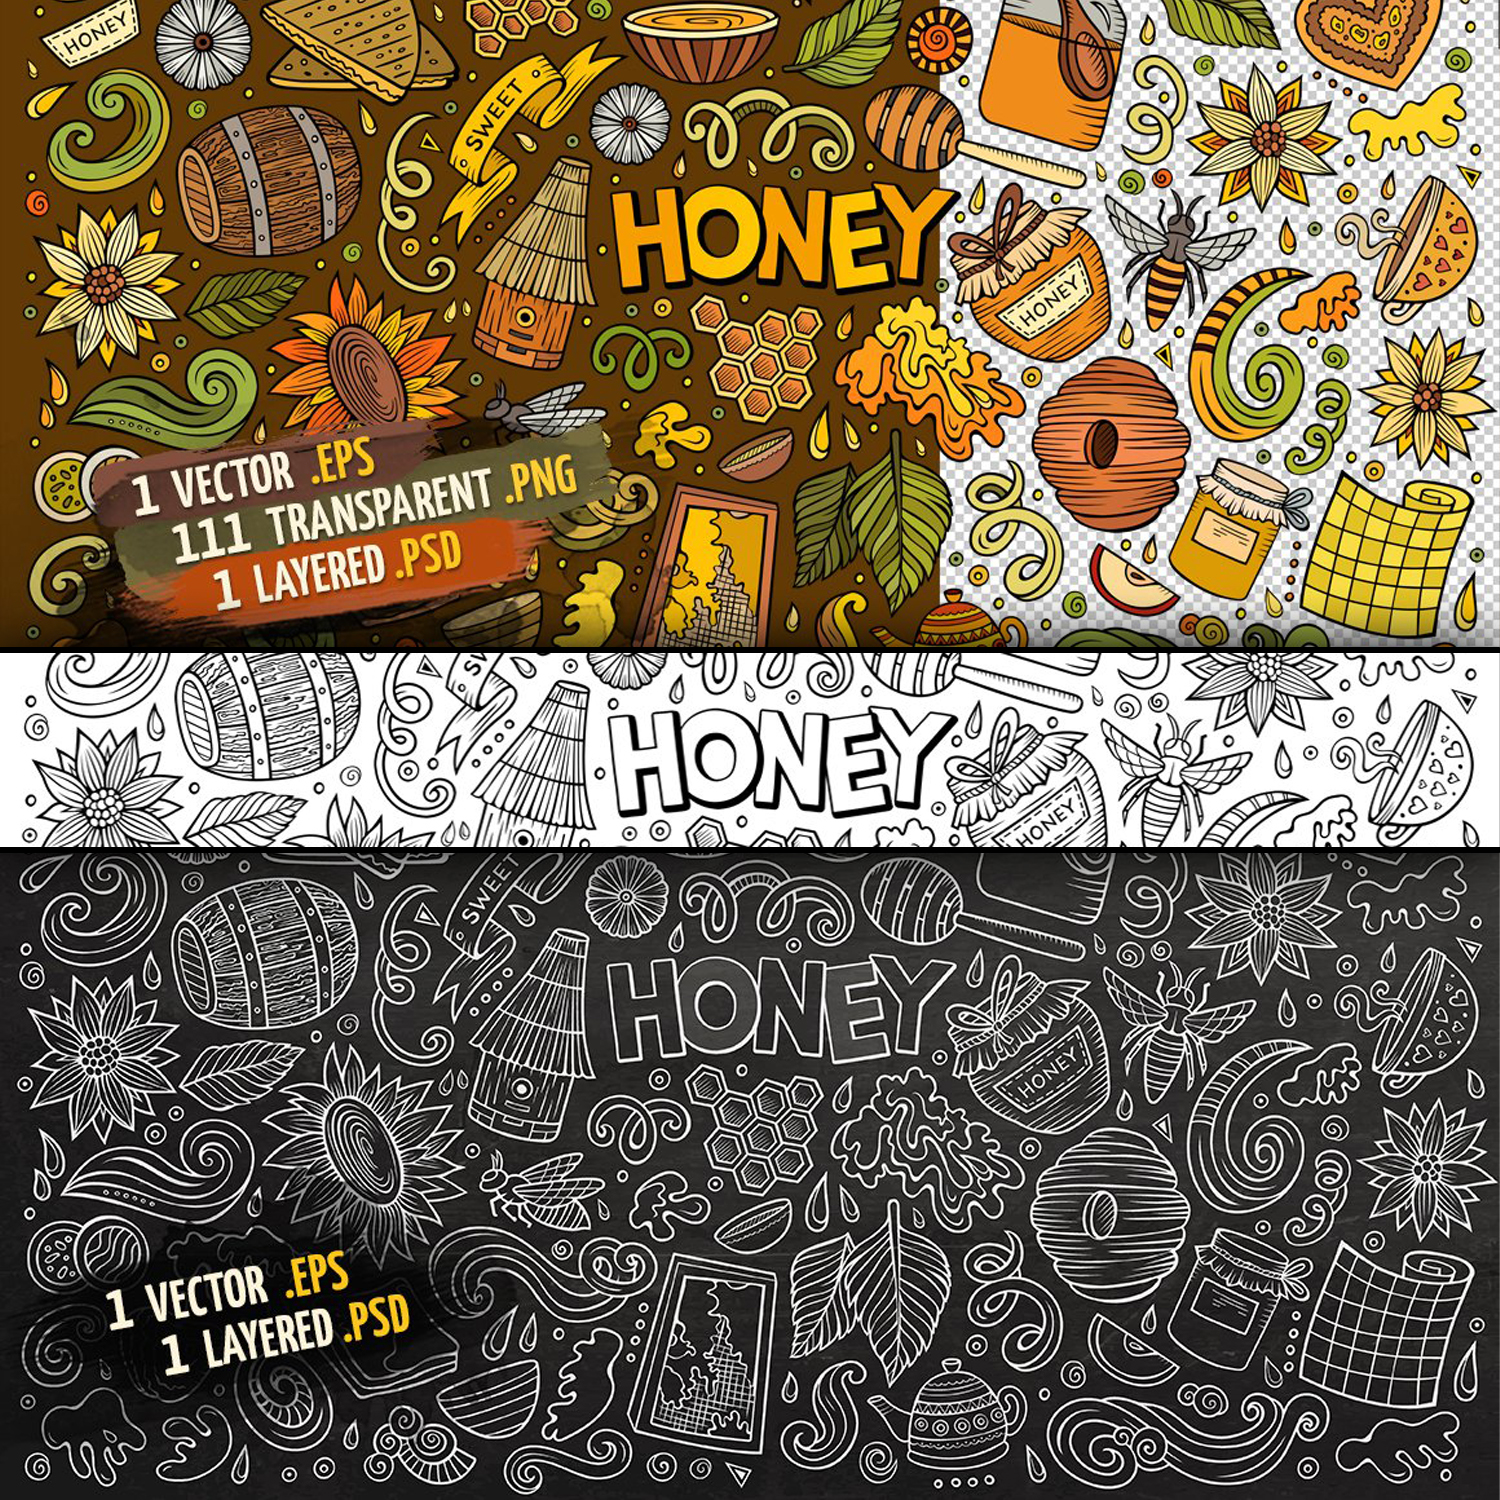 Honeycombs, bees, flowers and berries in three versions.